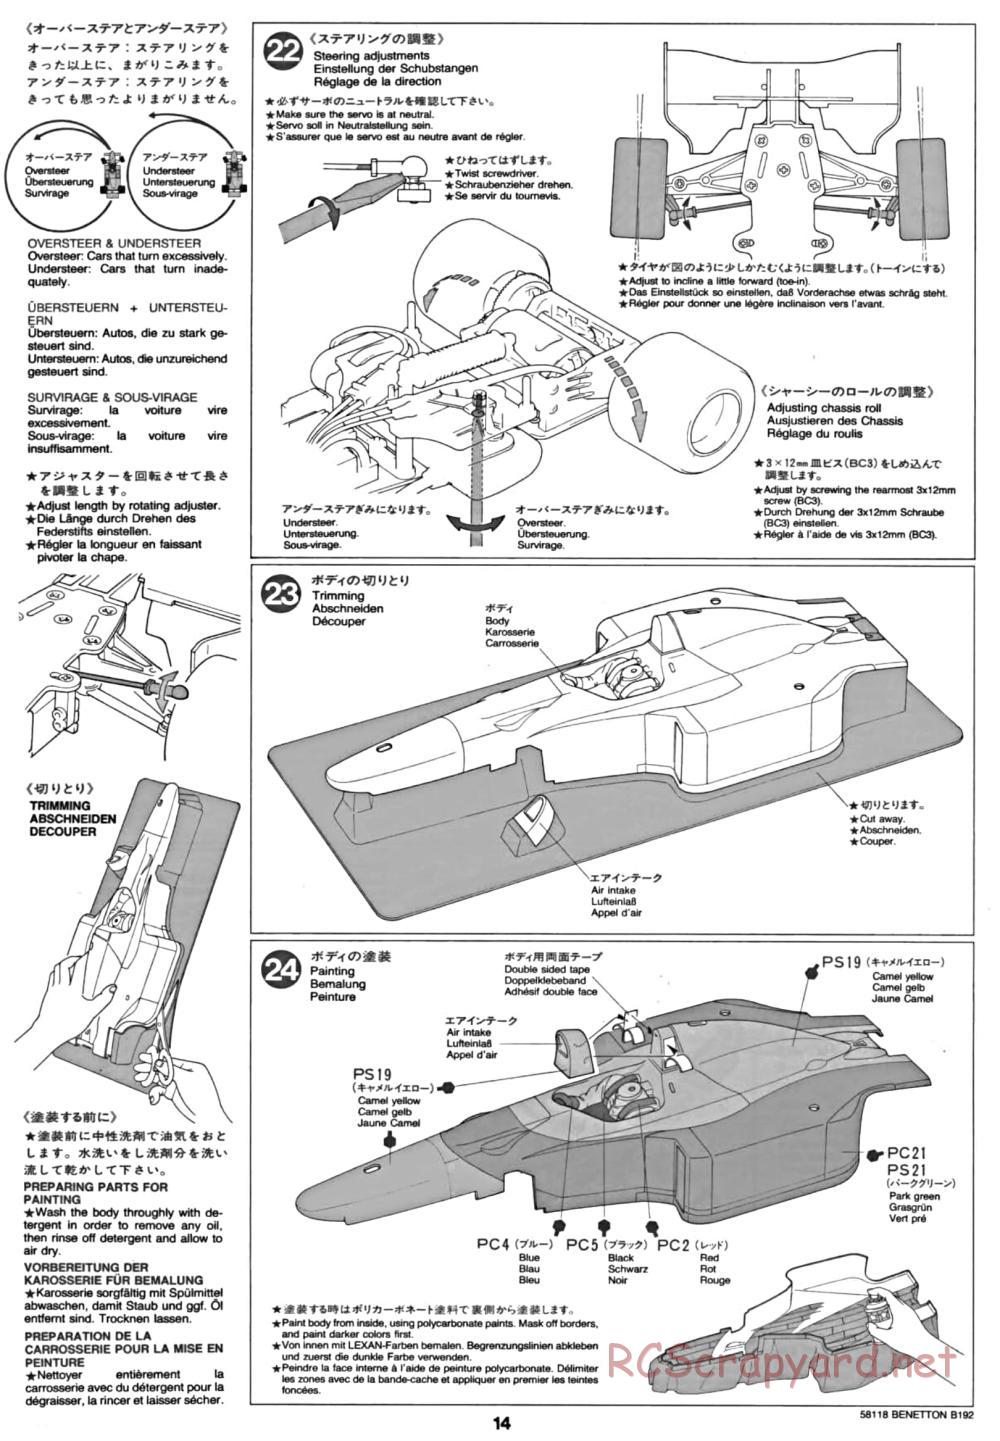 Tamiya - Benetton B192 - F102 Chassis - Manual - Page 14